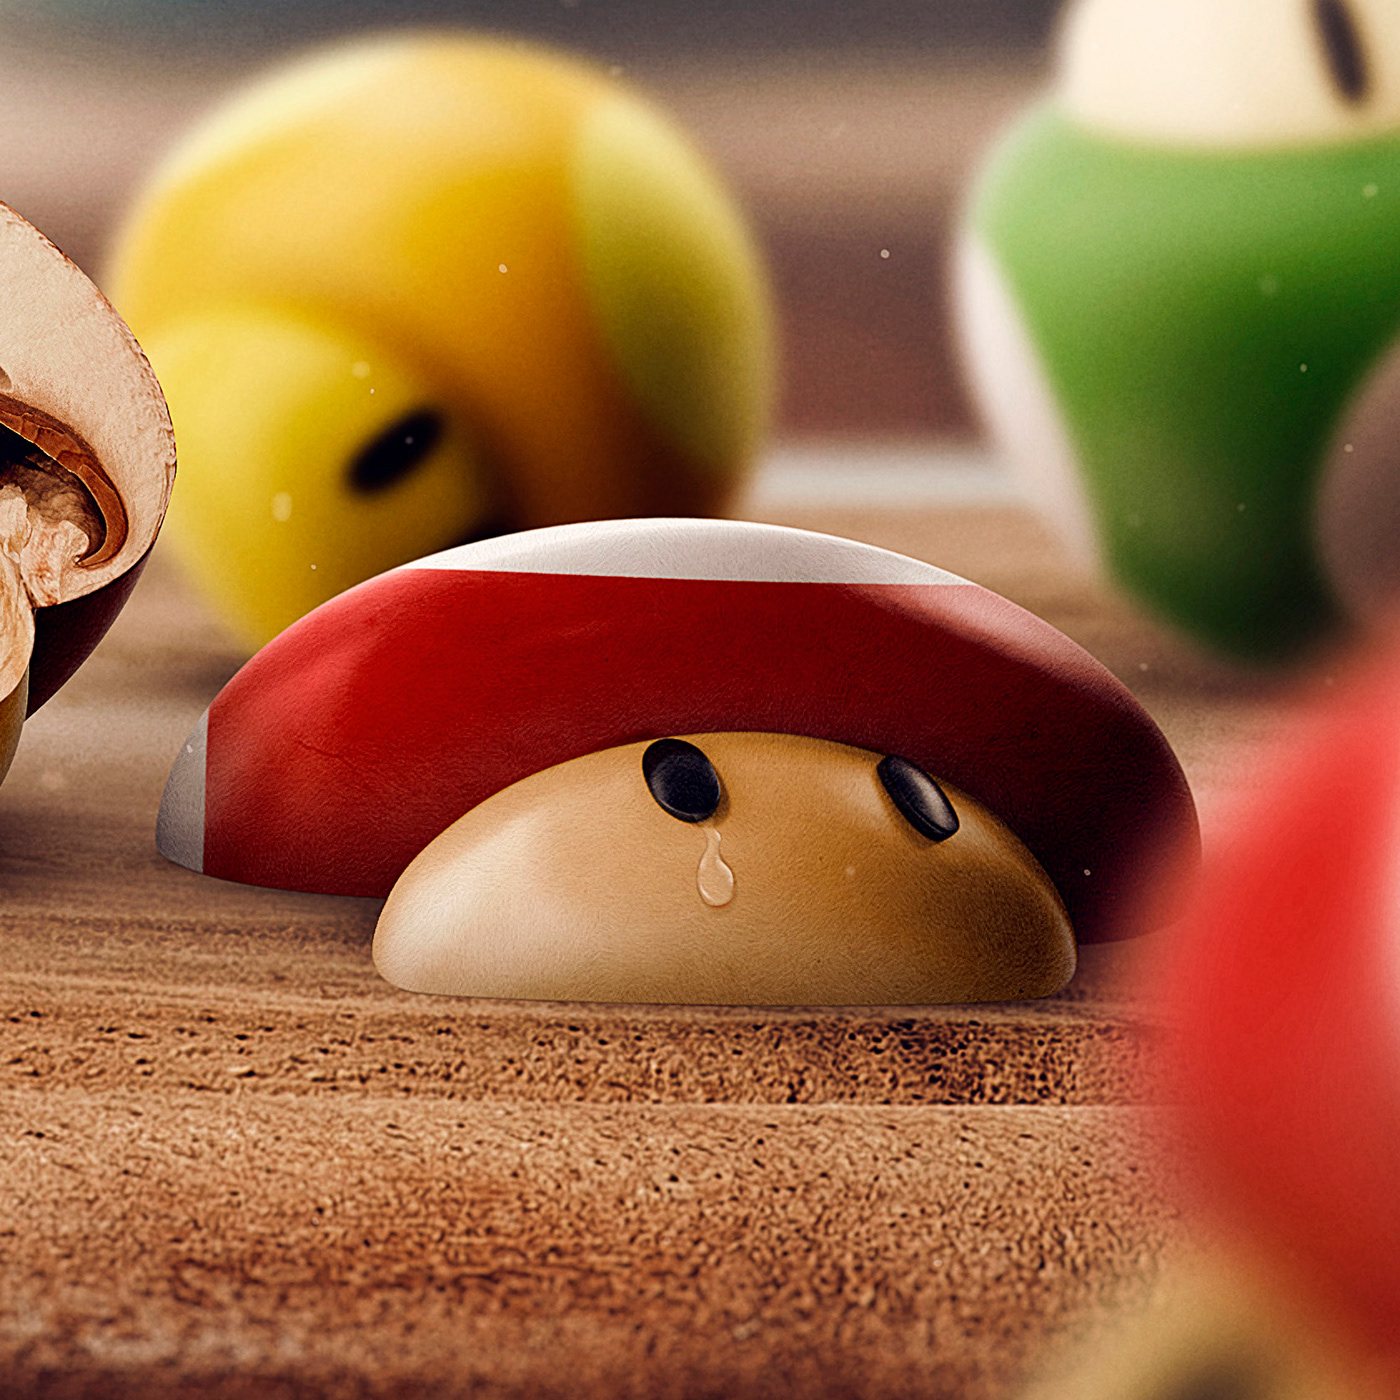 creativeretouch fantasy game manipulation mario mushroom Nintendo photoshop